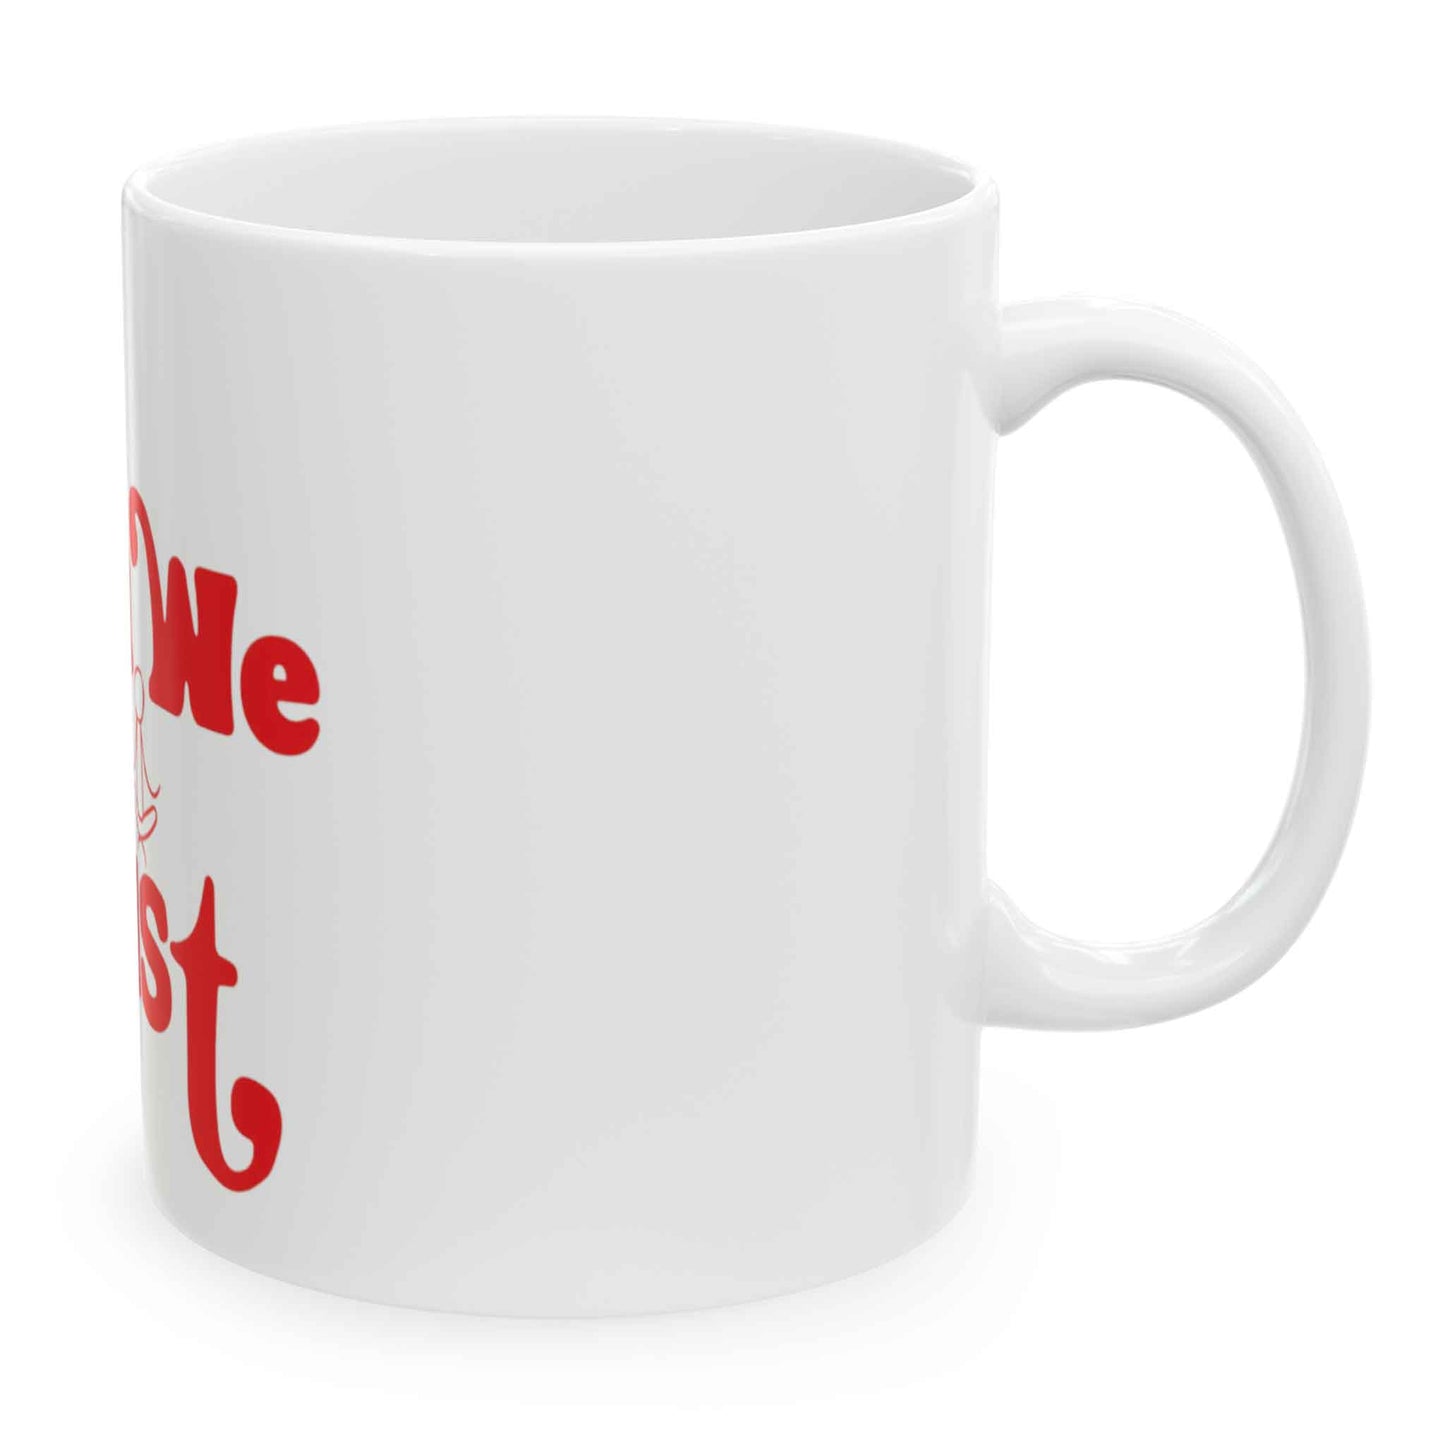 In Data We Trust - Red - Ceramic Mug, 11oz